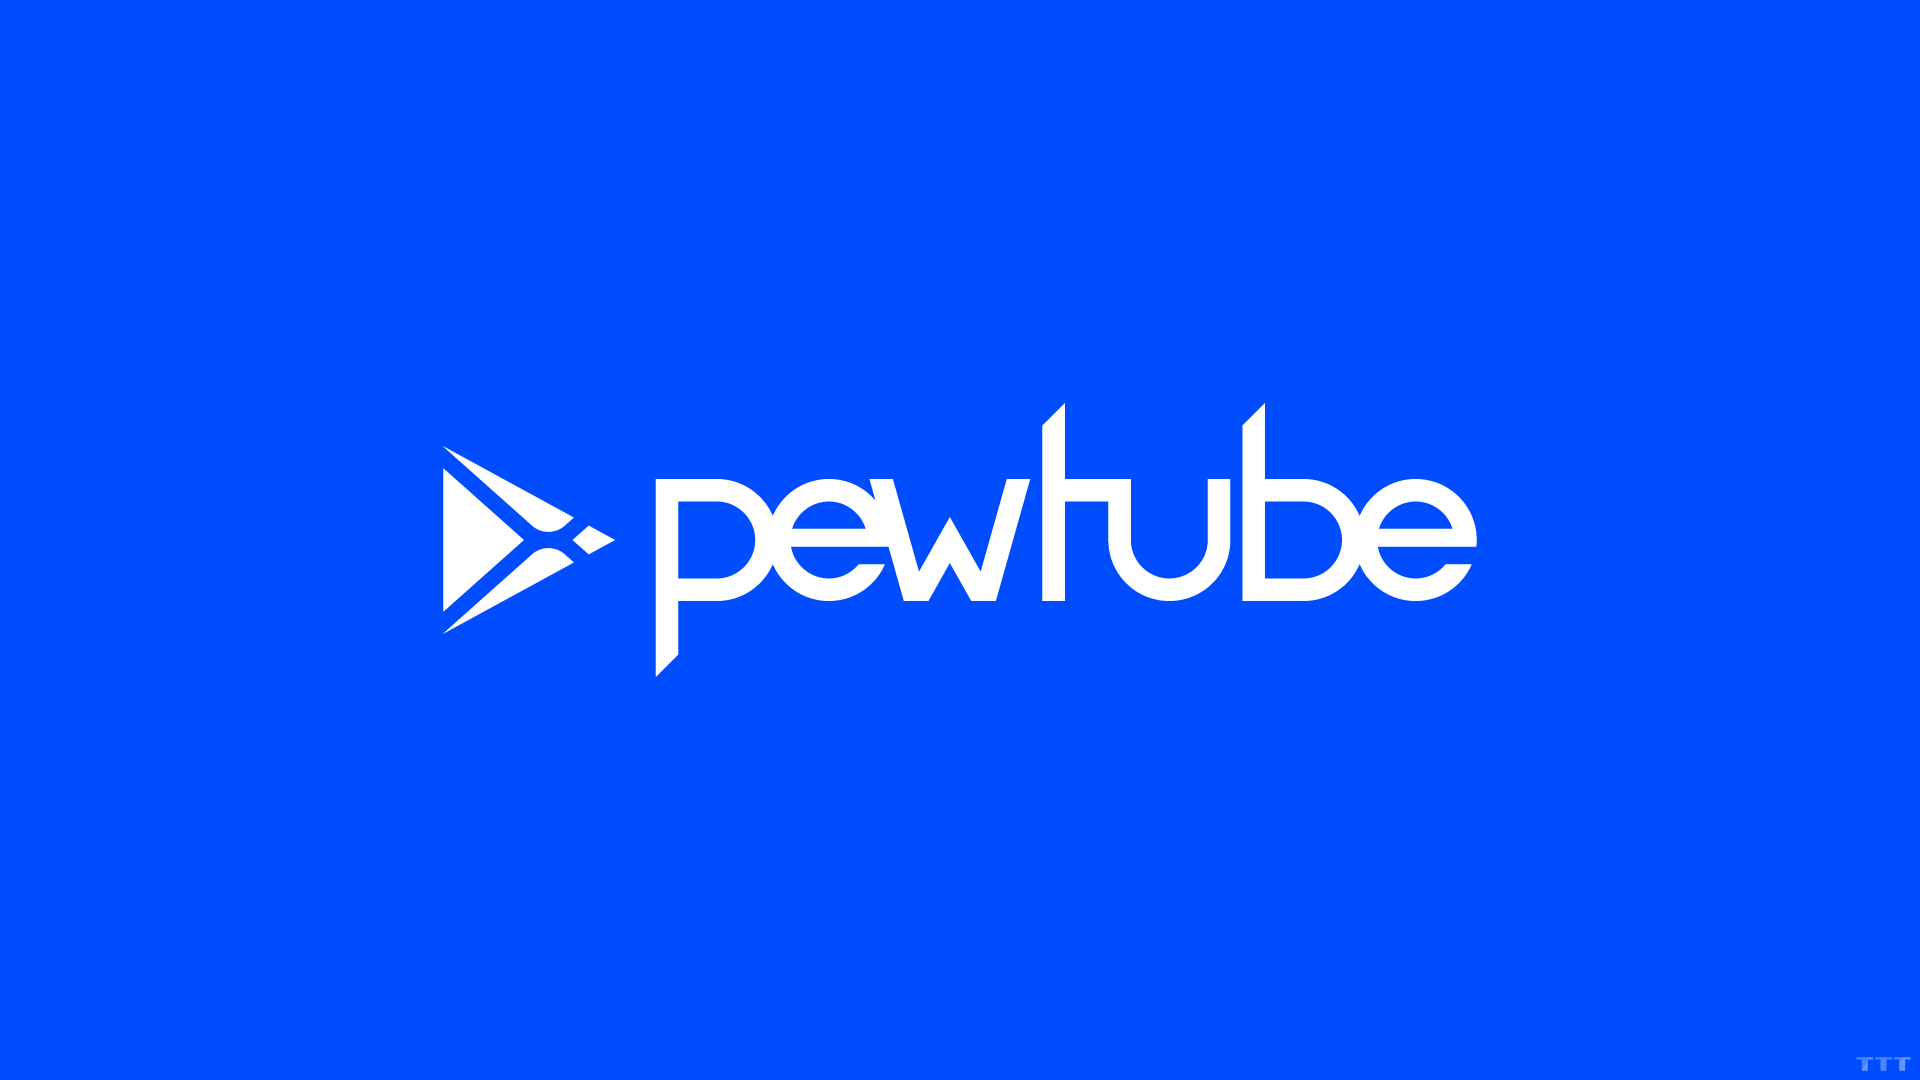 PewTube Logo Concept